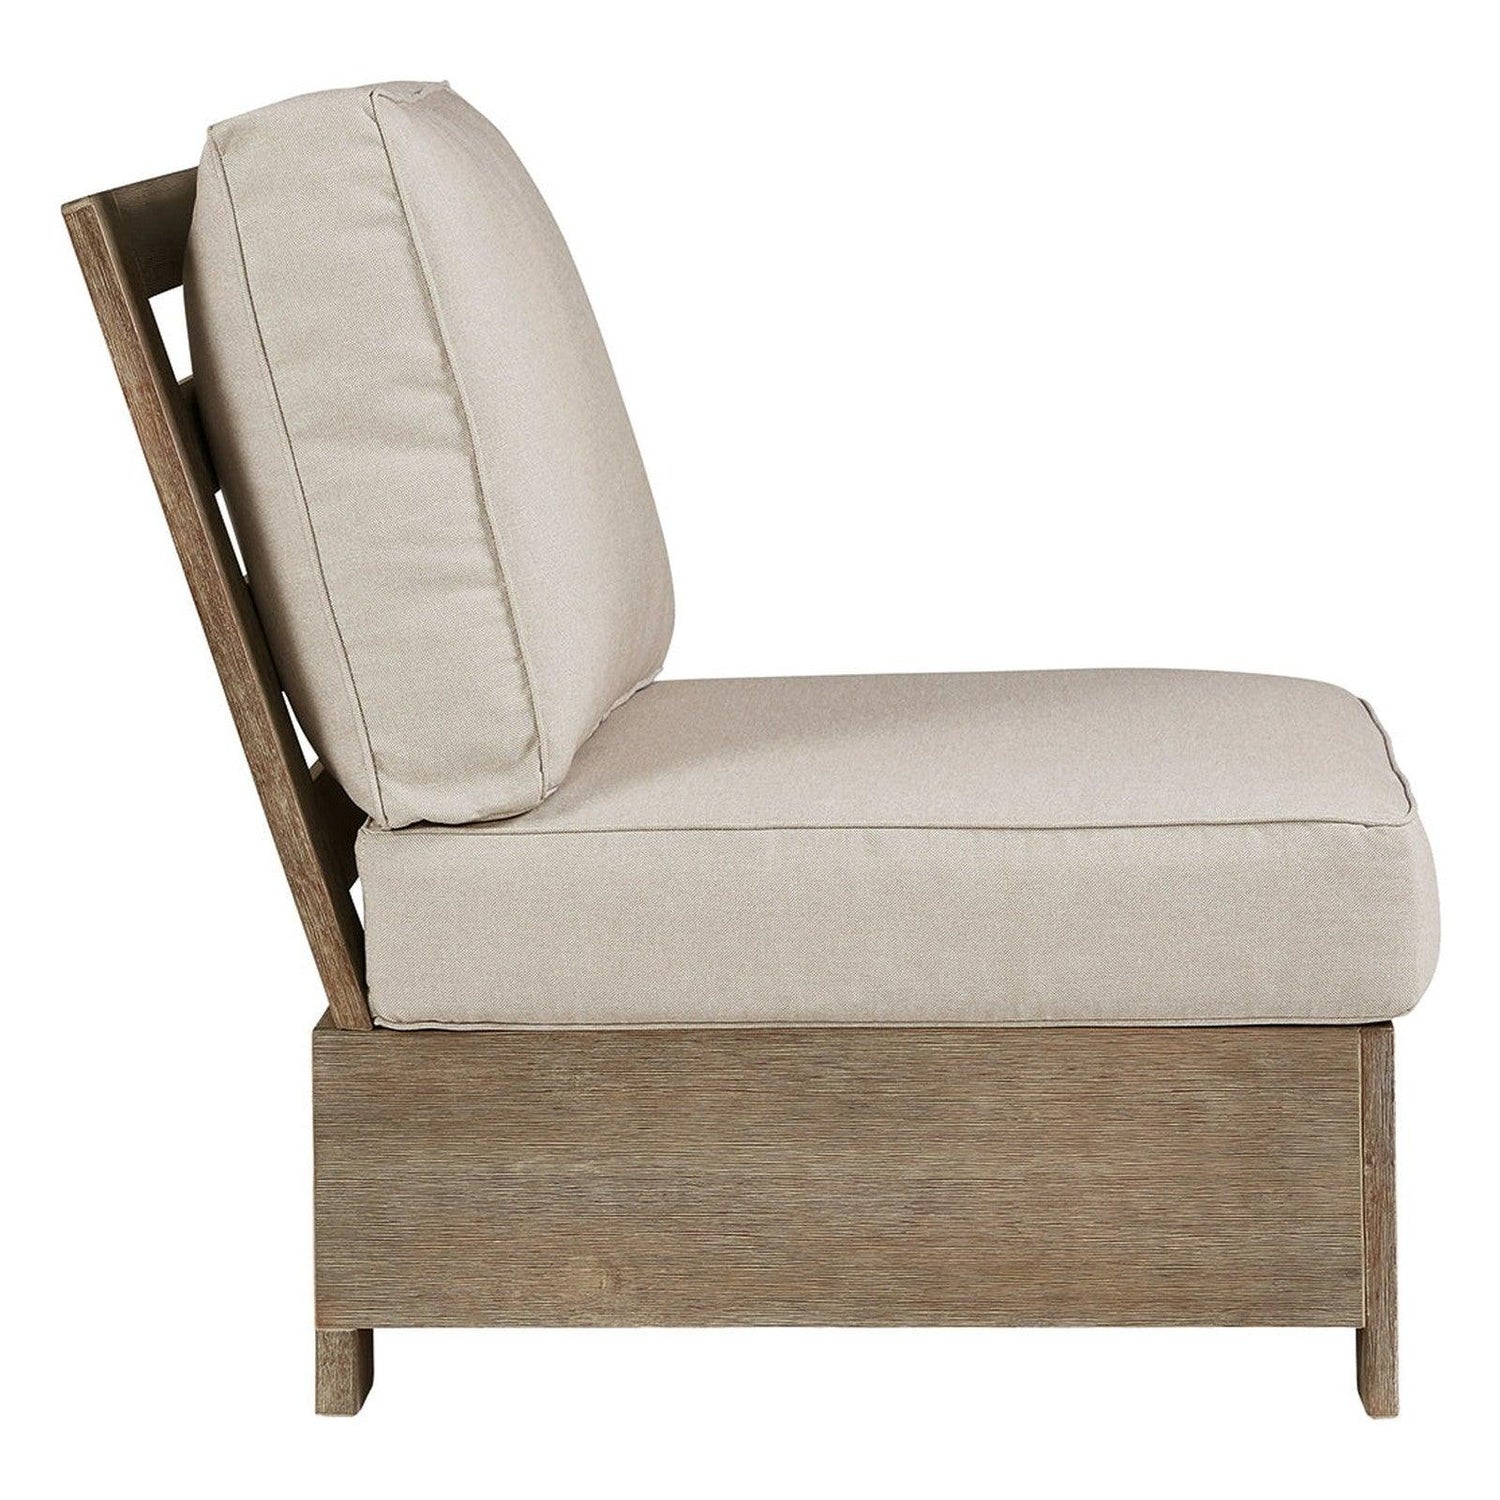 Silo Point Outdoor Armless Chair with Cushion Ash-P804-846